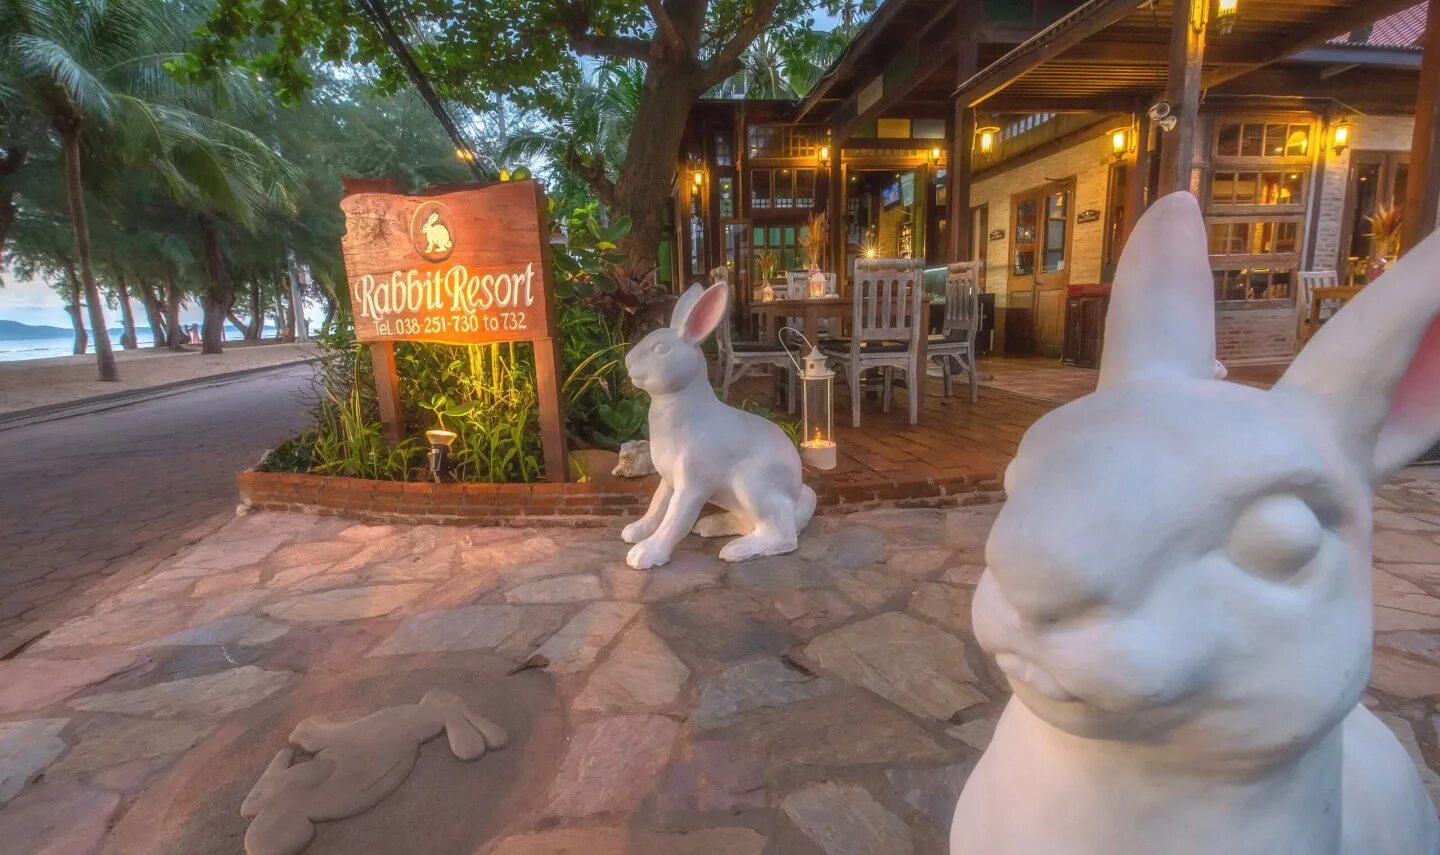 Rabbit hotel. Раббит Ресорт Паттайя. Отель Rabbit Resort Pattaya. Таиланд Паттайя рэббит Резорт. Rabbit Resort 4*.